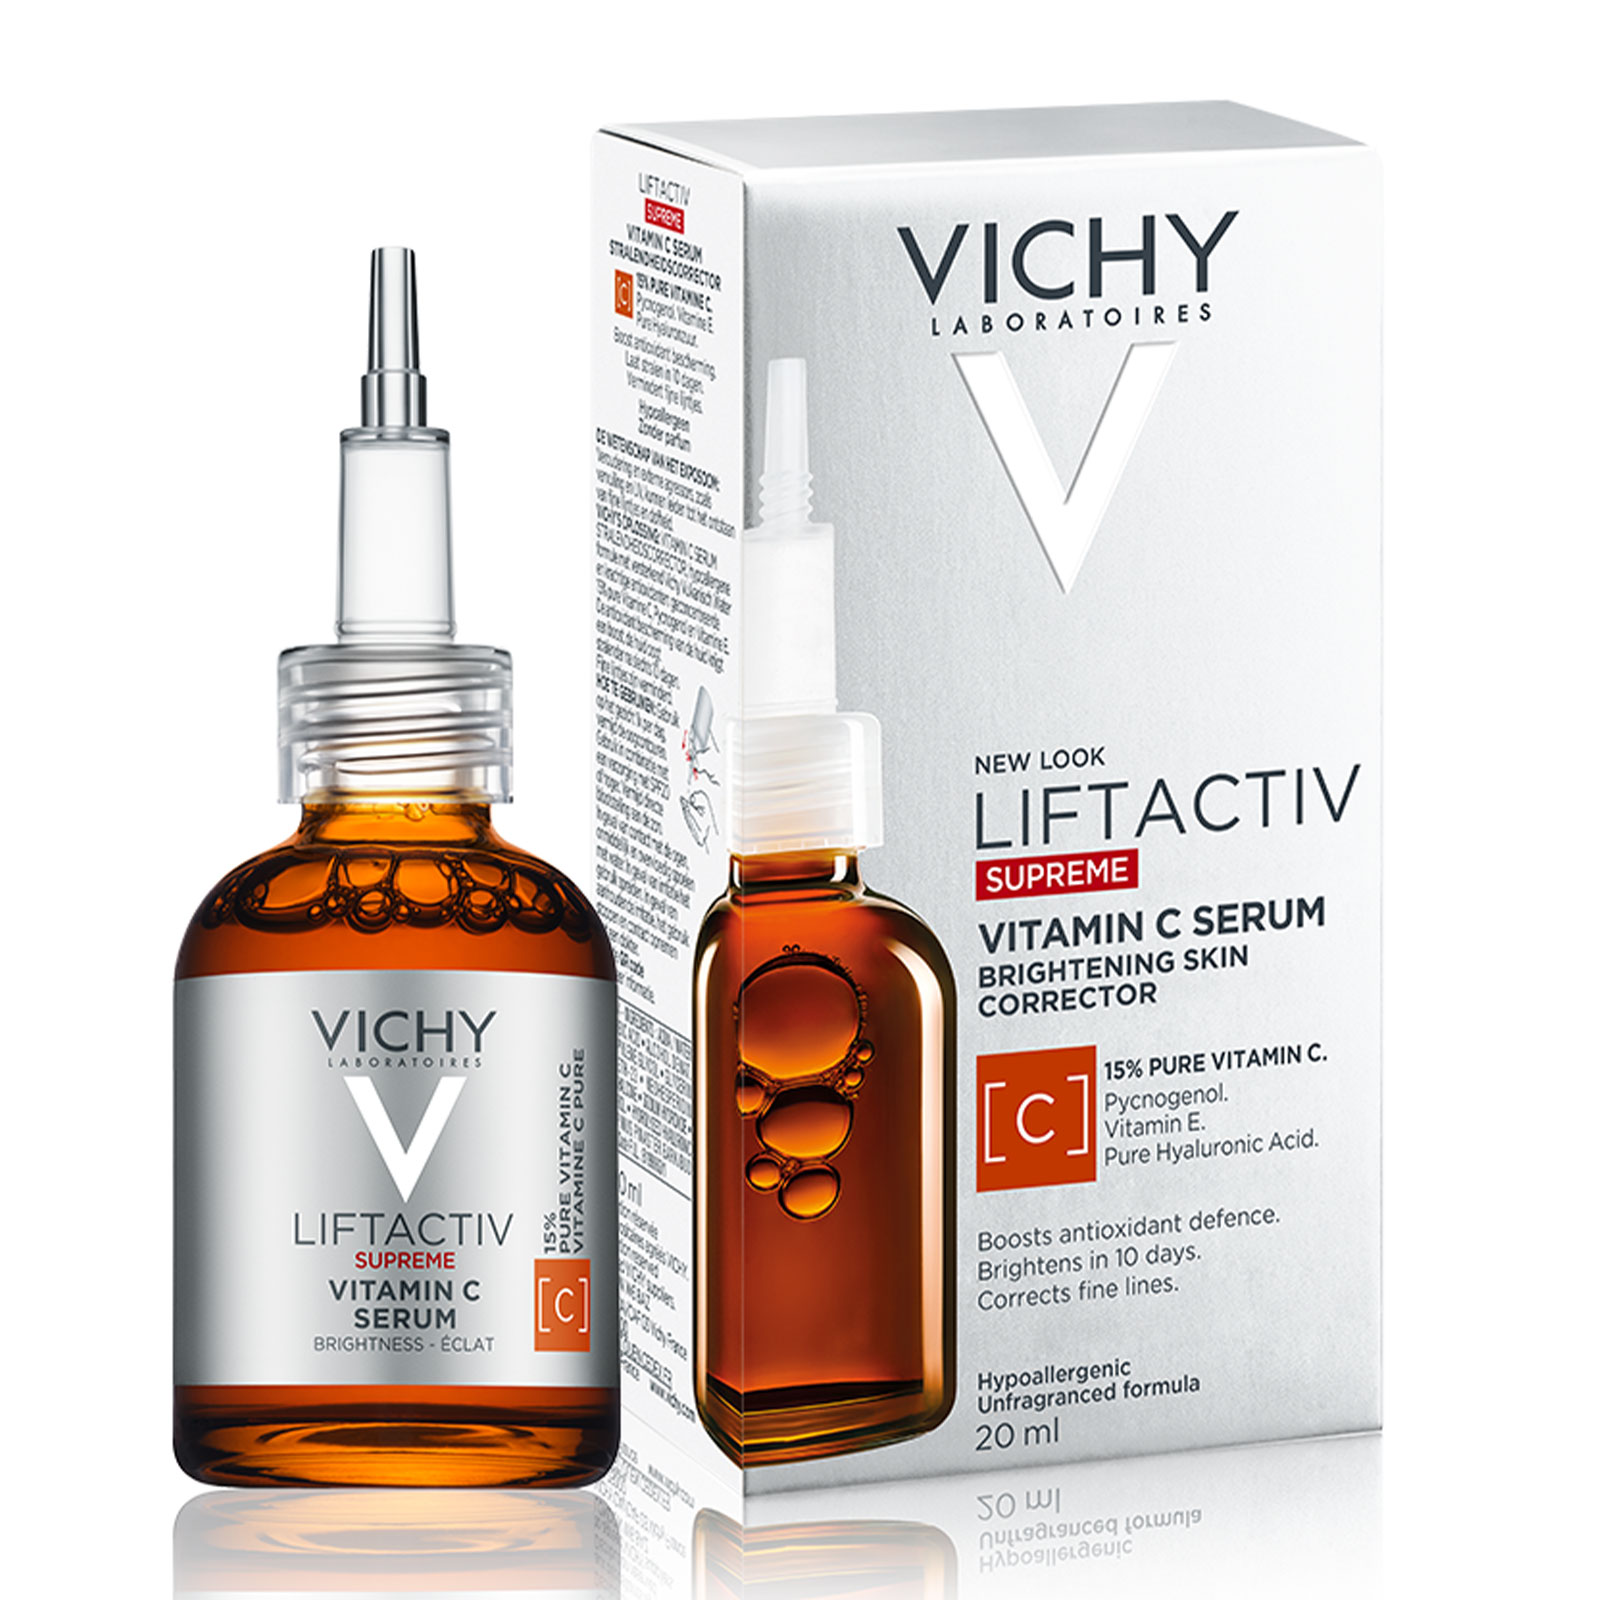 Vichy Liftactiv Supreme�15% Pure Vitamin C Brightening Skin Corrector Serum 20ml